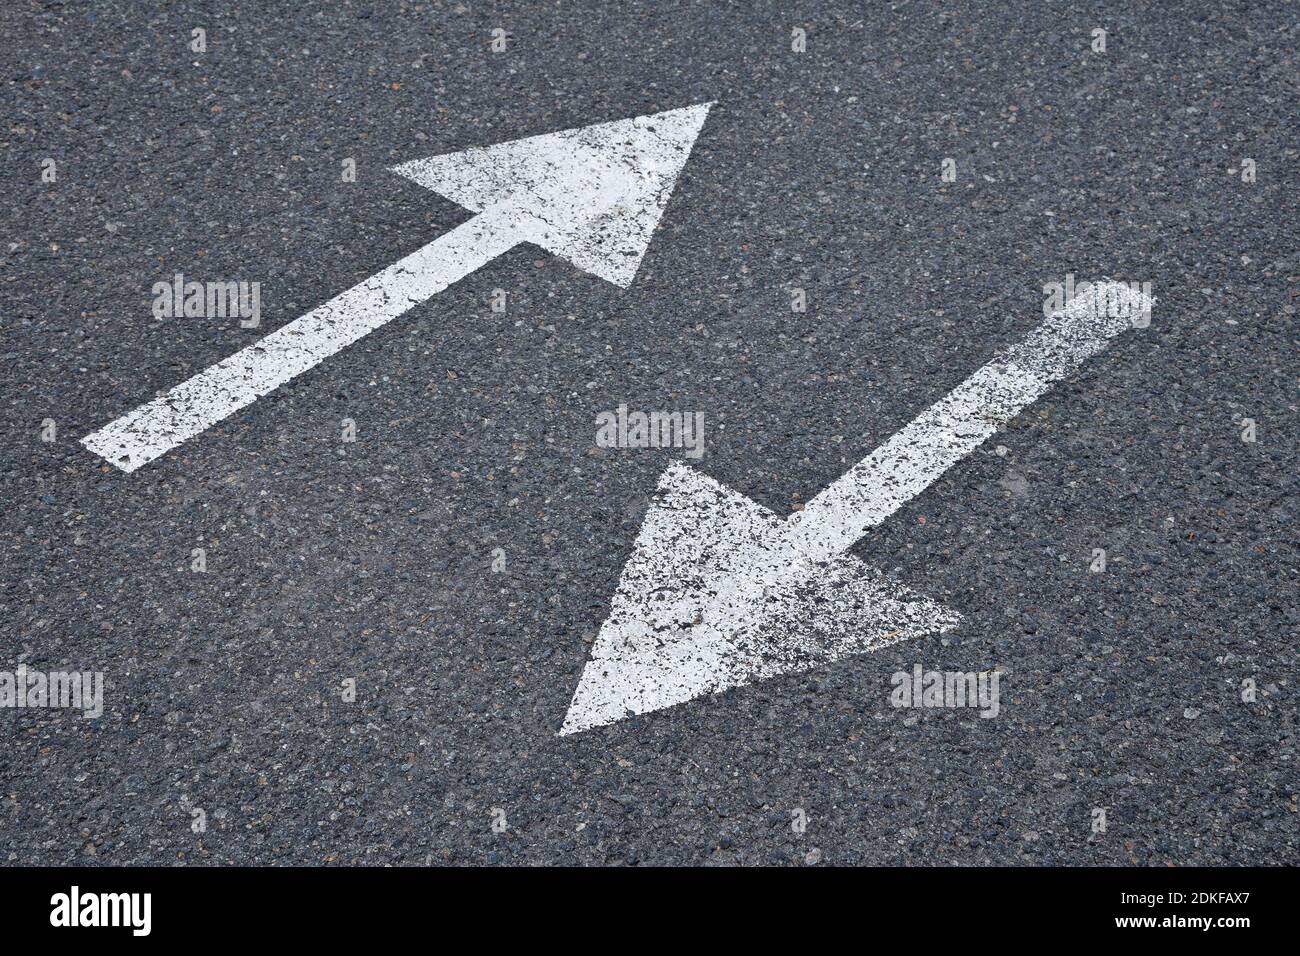 High Angle View Of Arrow Symbols On Road Stock Photo